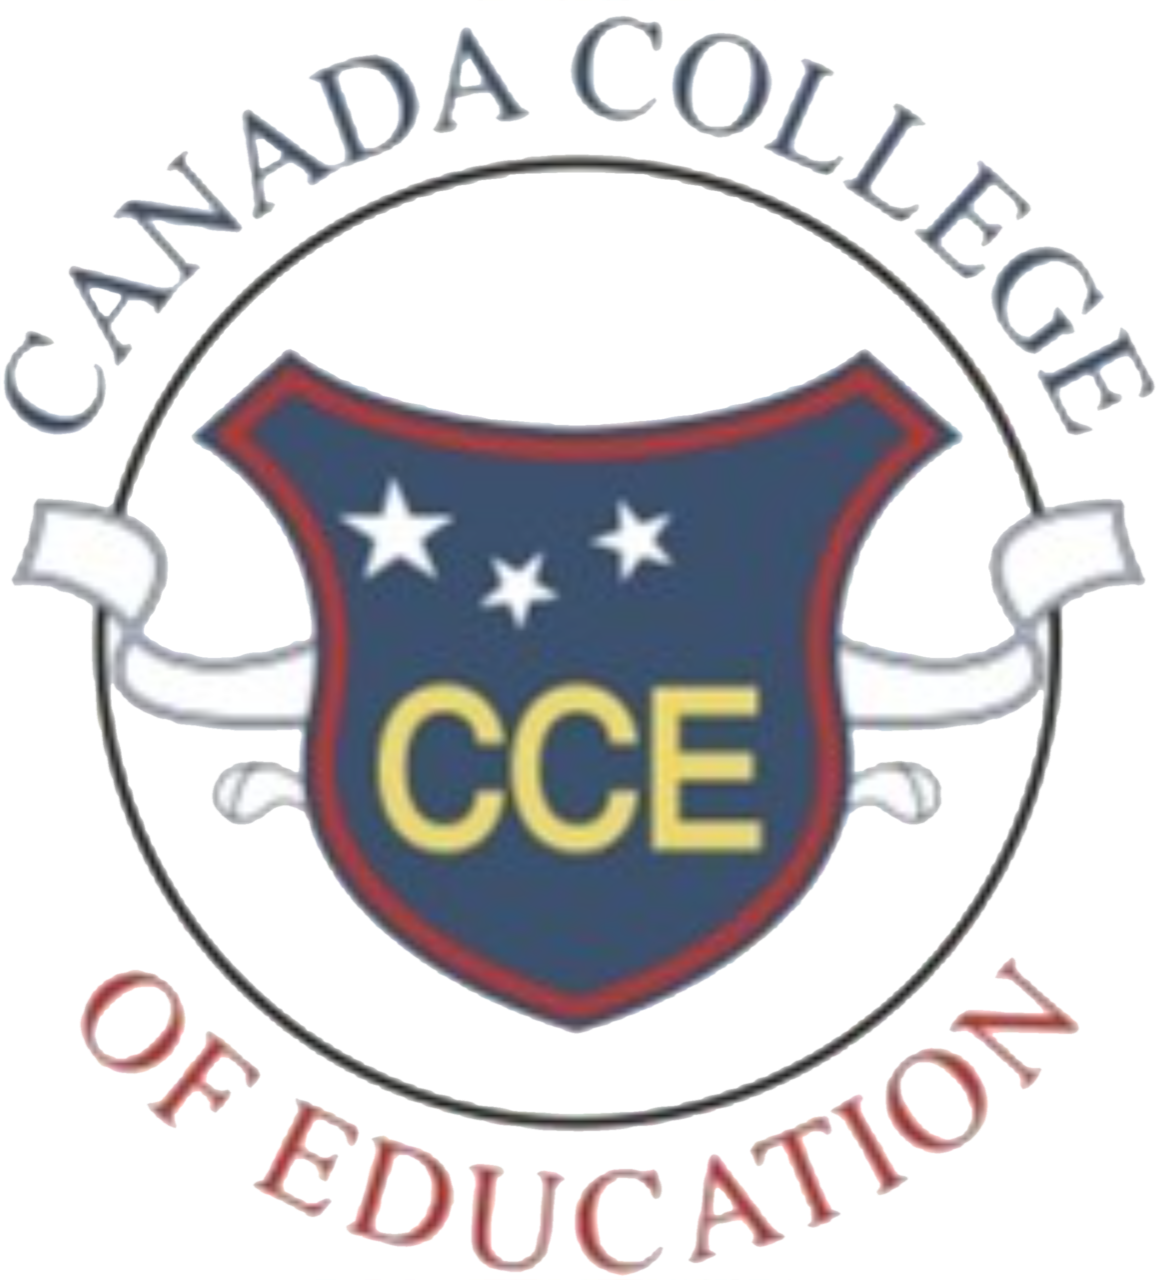 Canada College of Education Logo